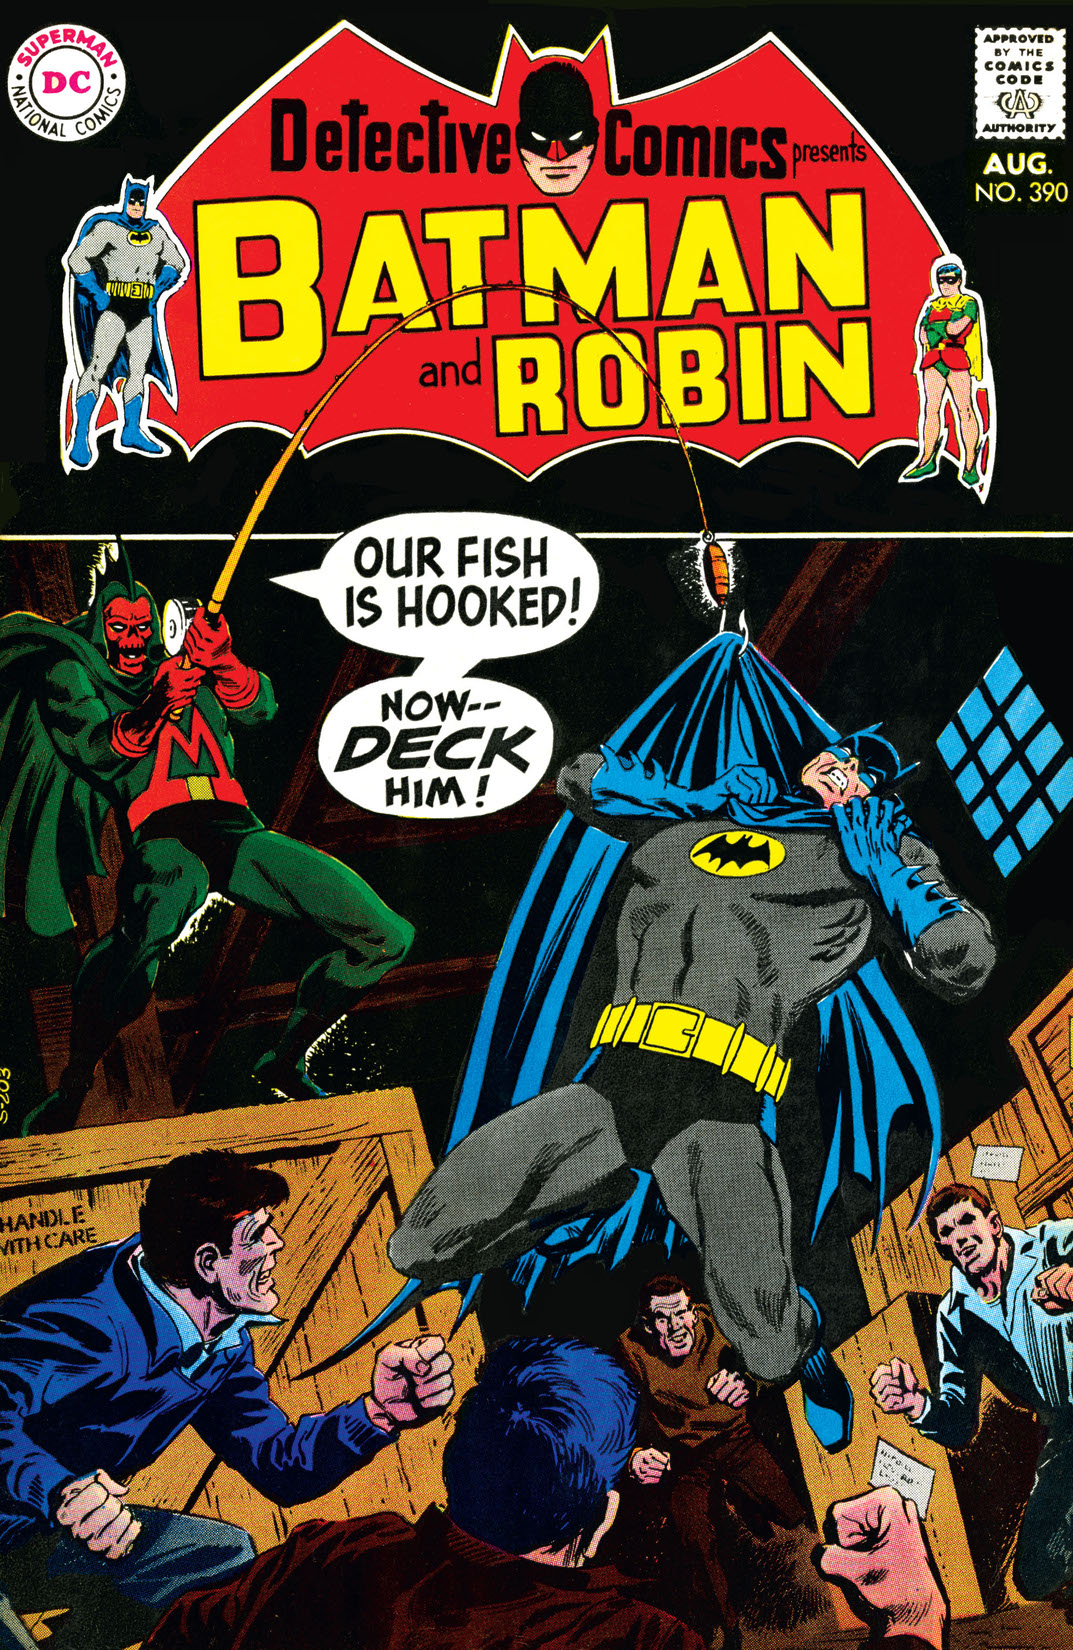 Detective Comics (1937-) #390 preview images